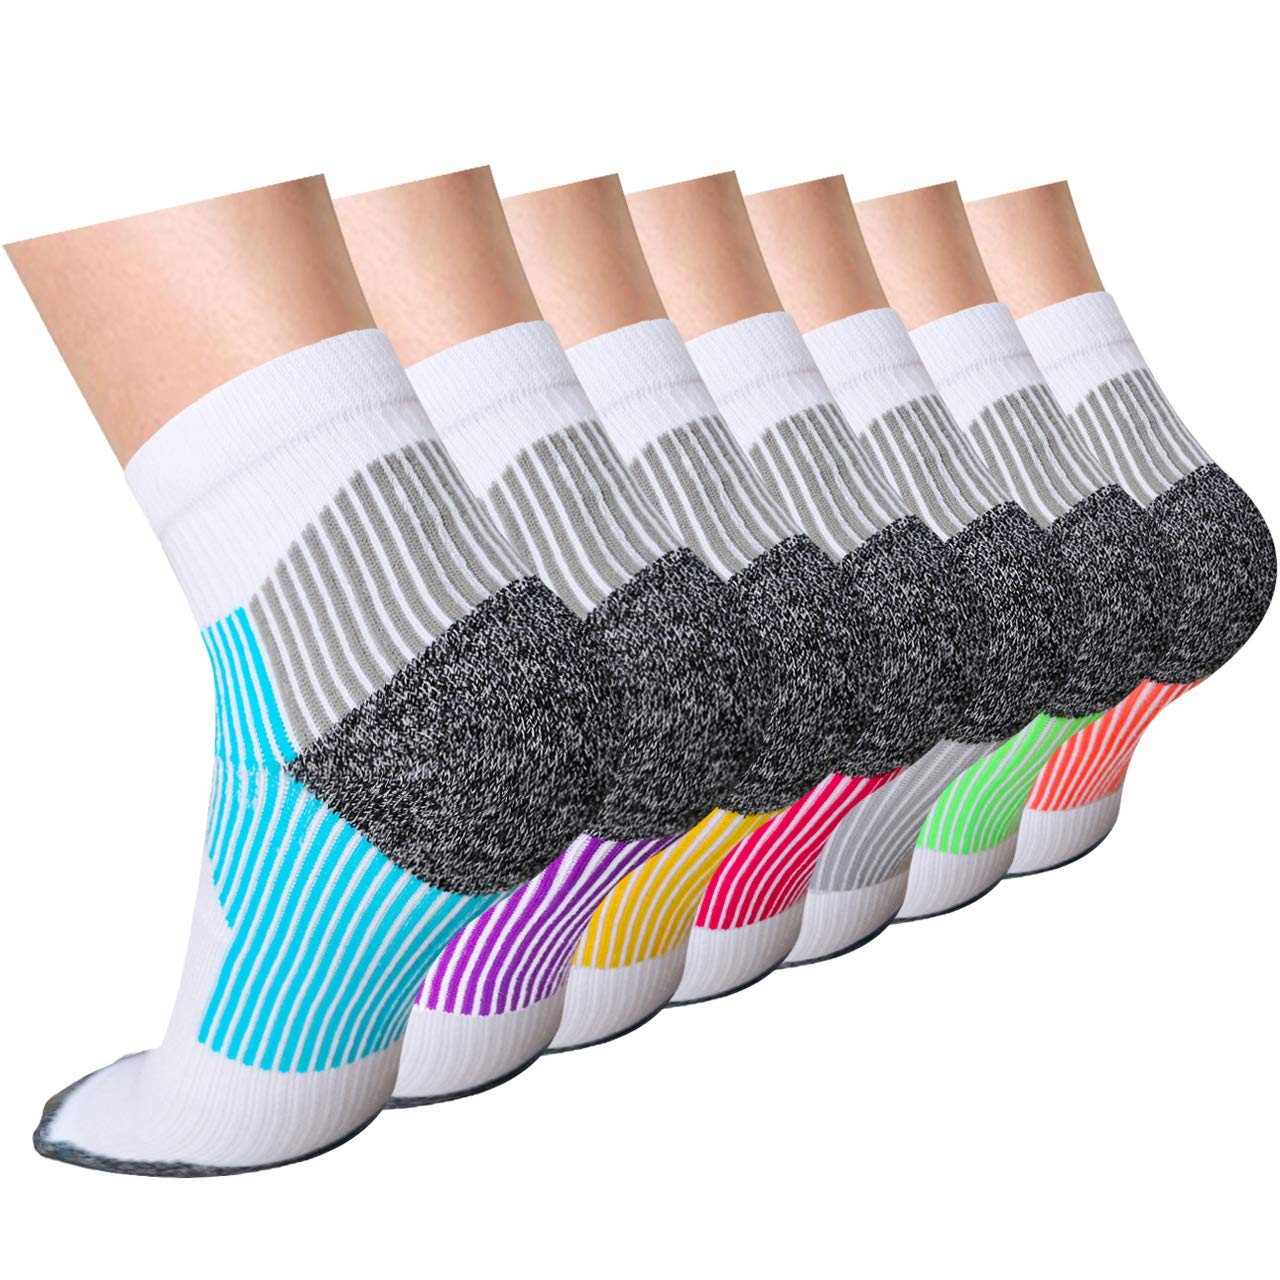 compression socks for planters fasciitis